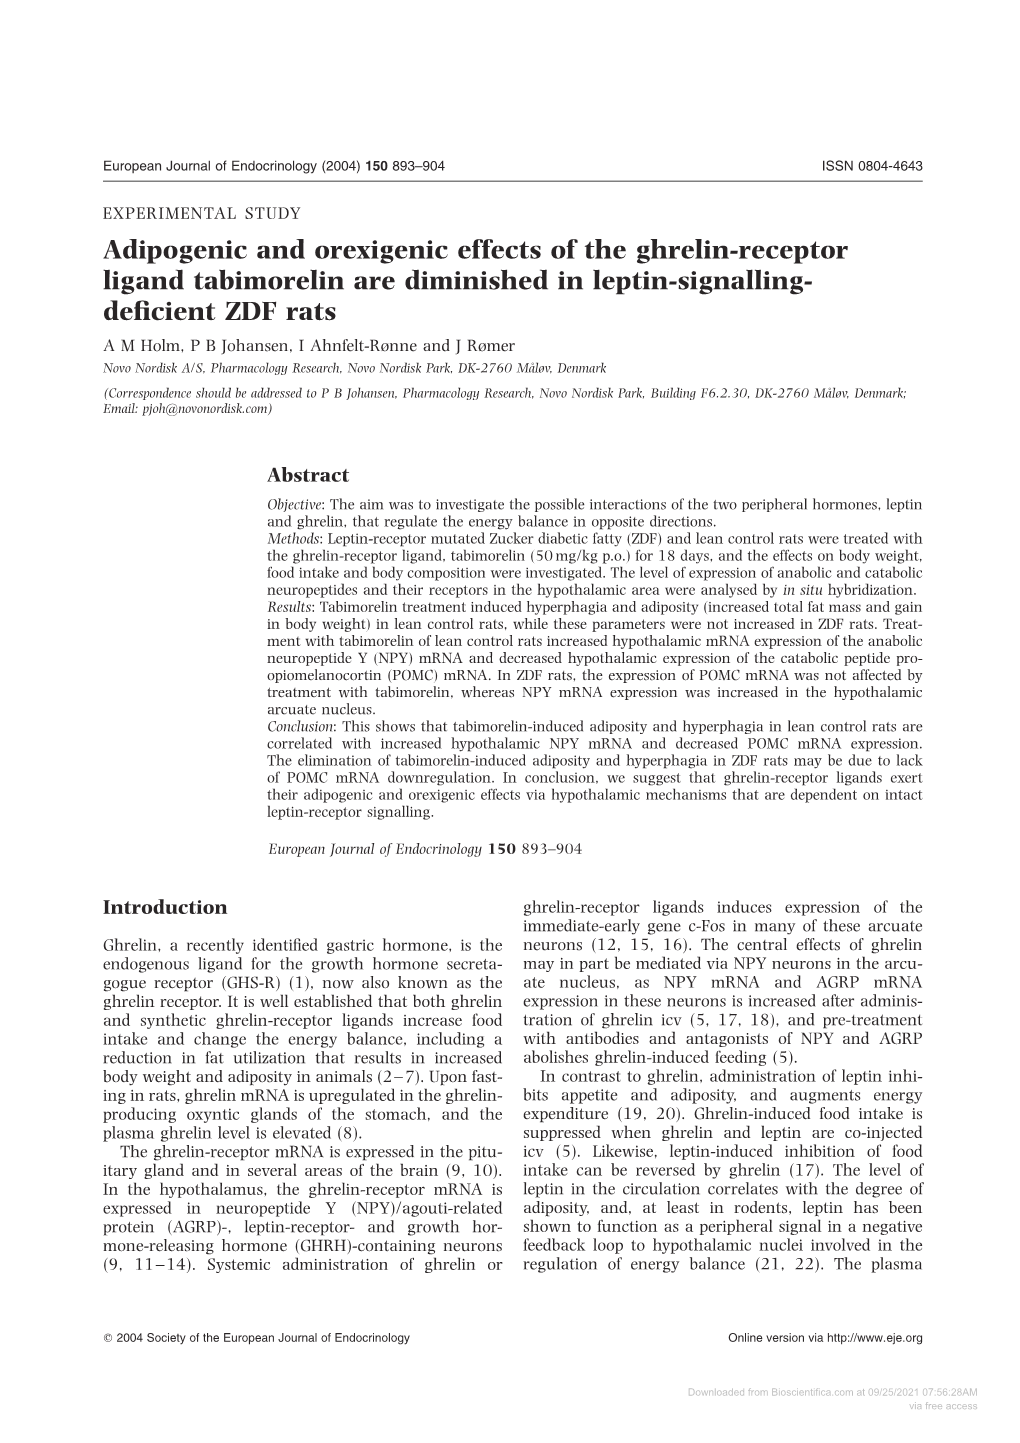 Adipogenic and Orexigenic Effects Of